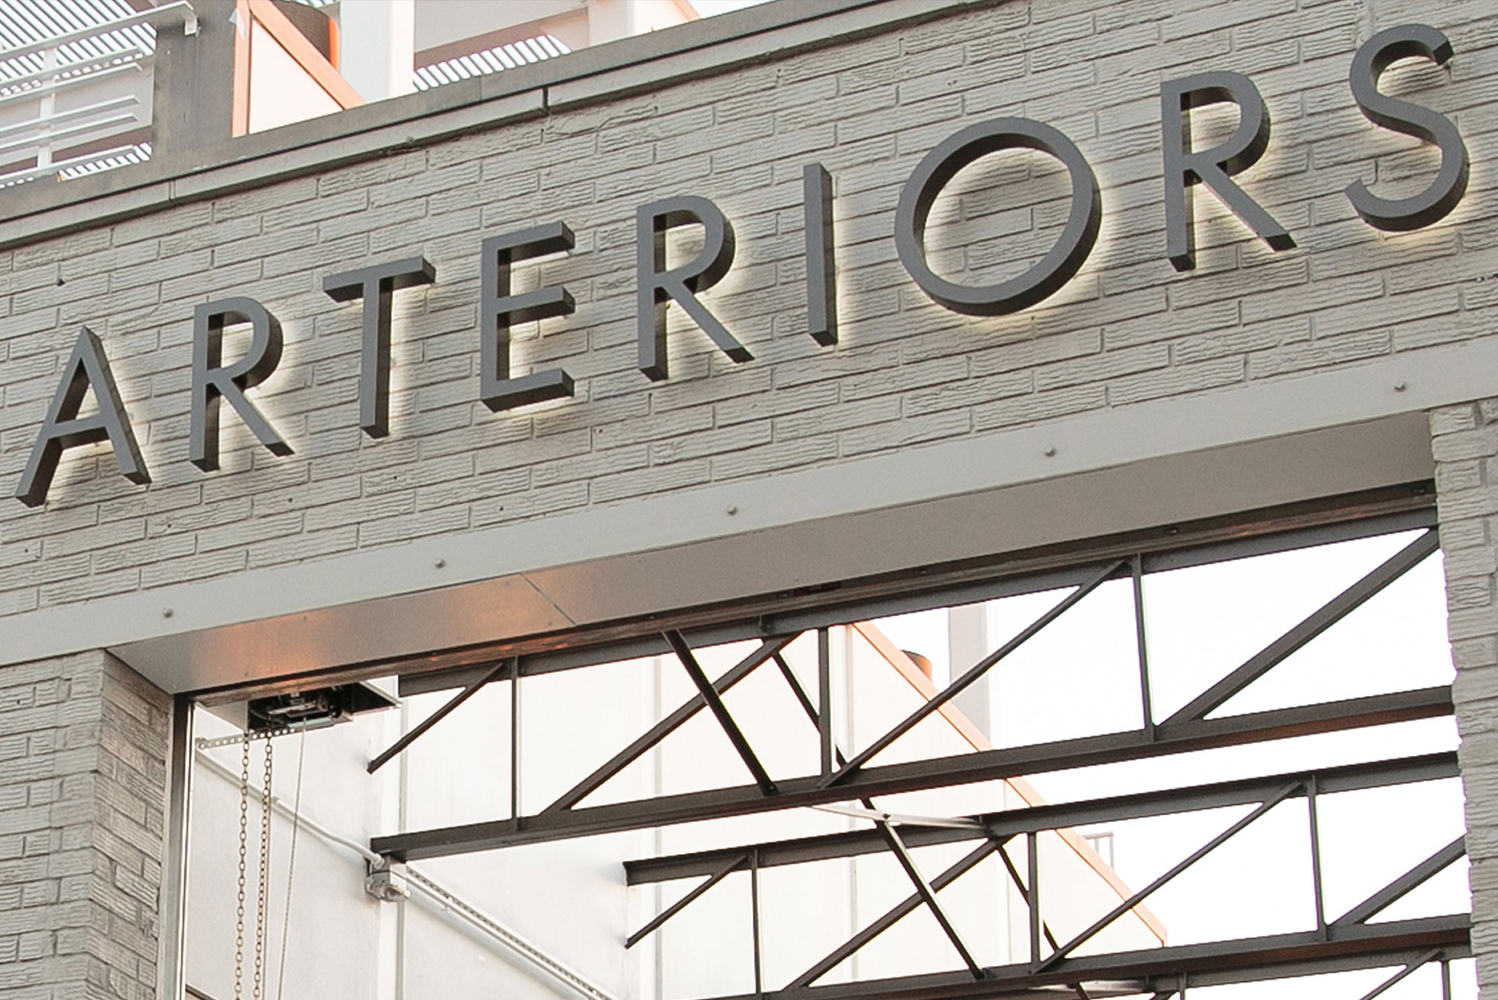 Arteriors opens new lighting showroom at Dallas Market Center